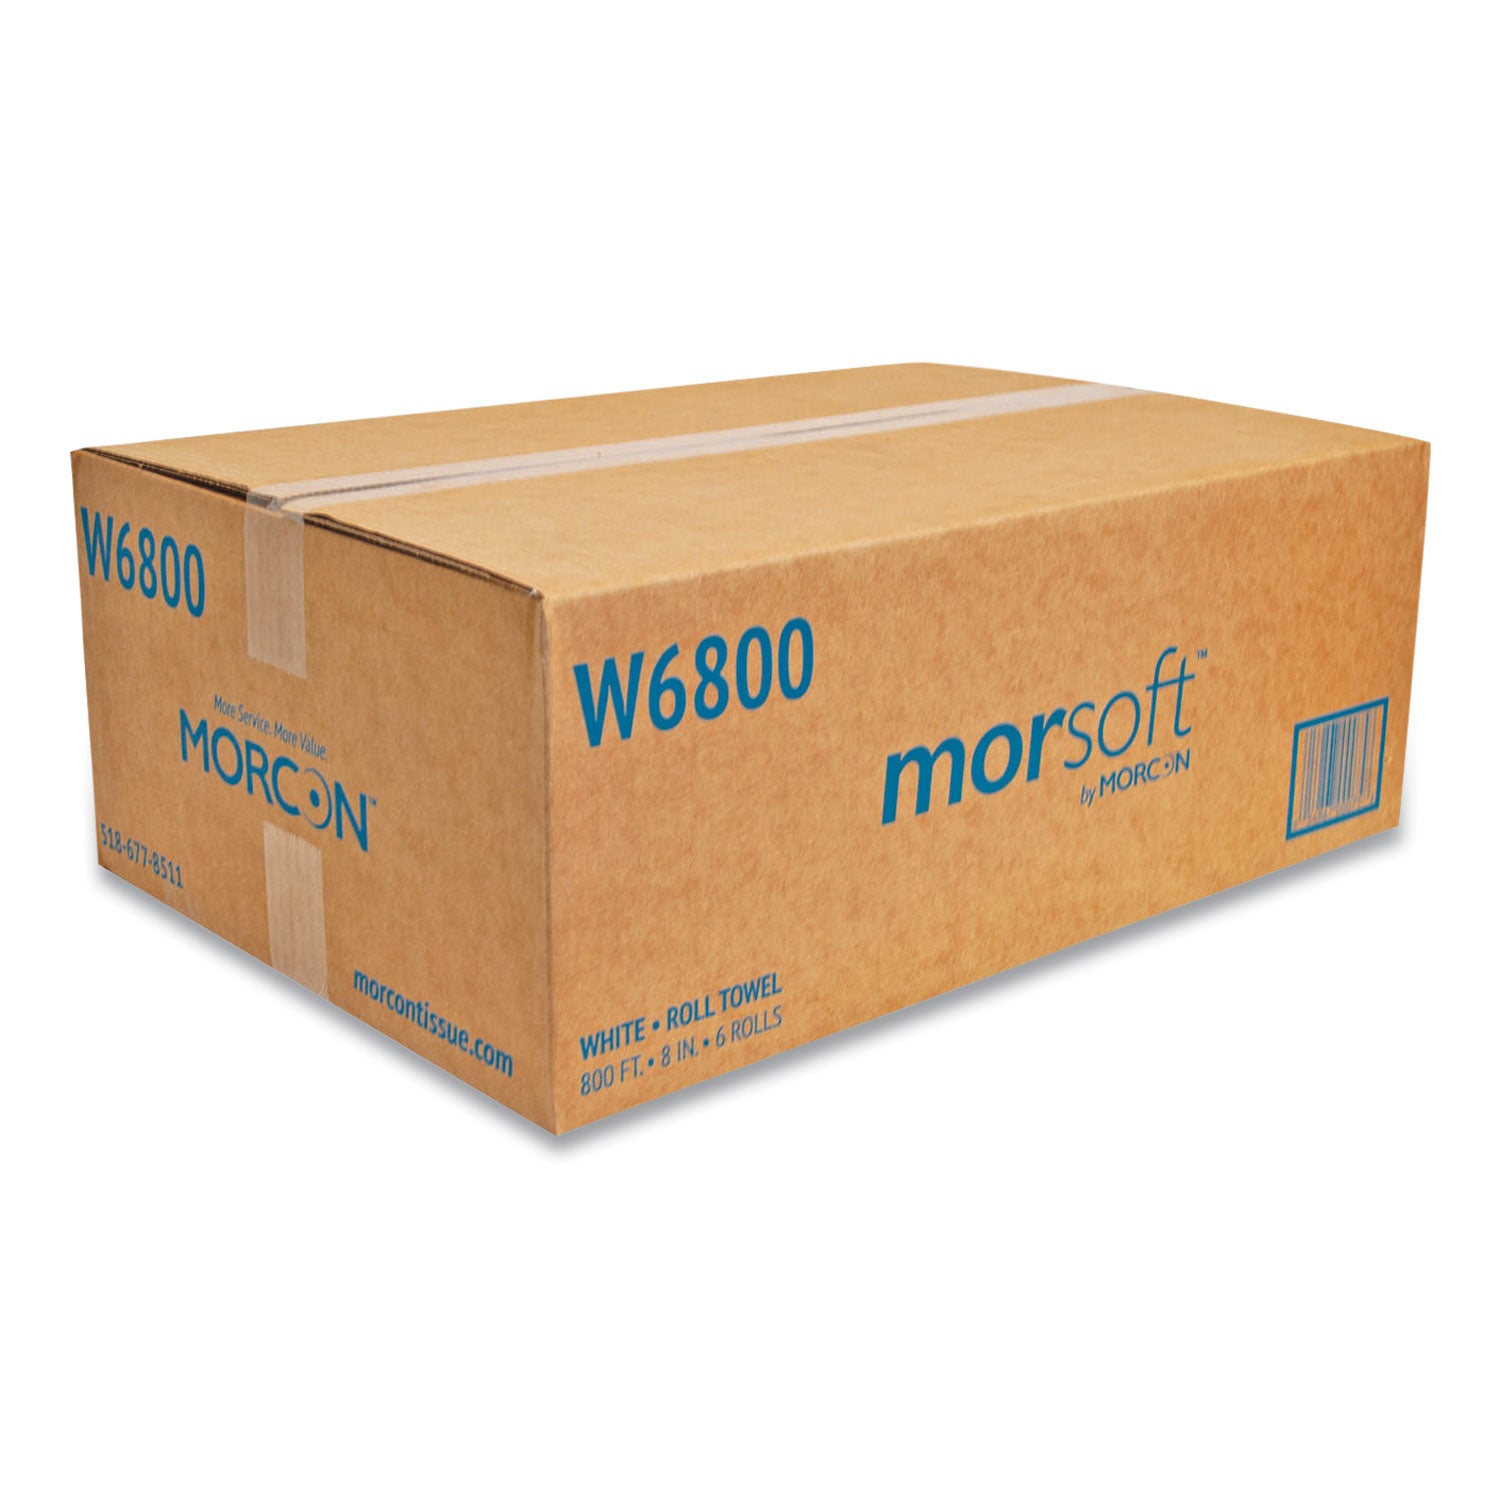 morsoft-universal-roll-towels-1-ply-8-x-800-ft-white-6-rolls-carton_morw6800 - 2